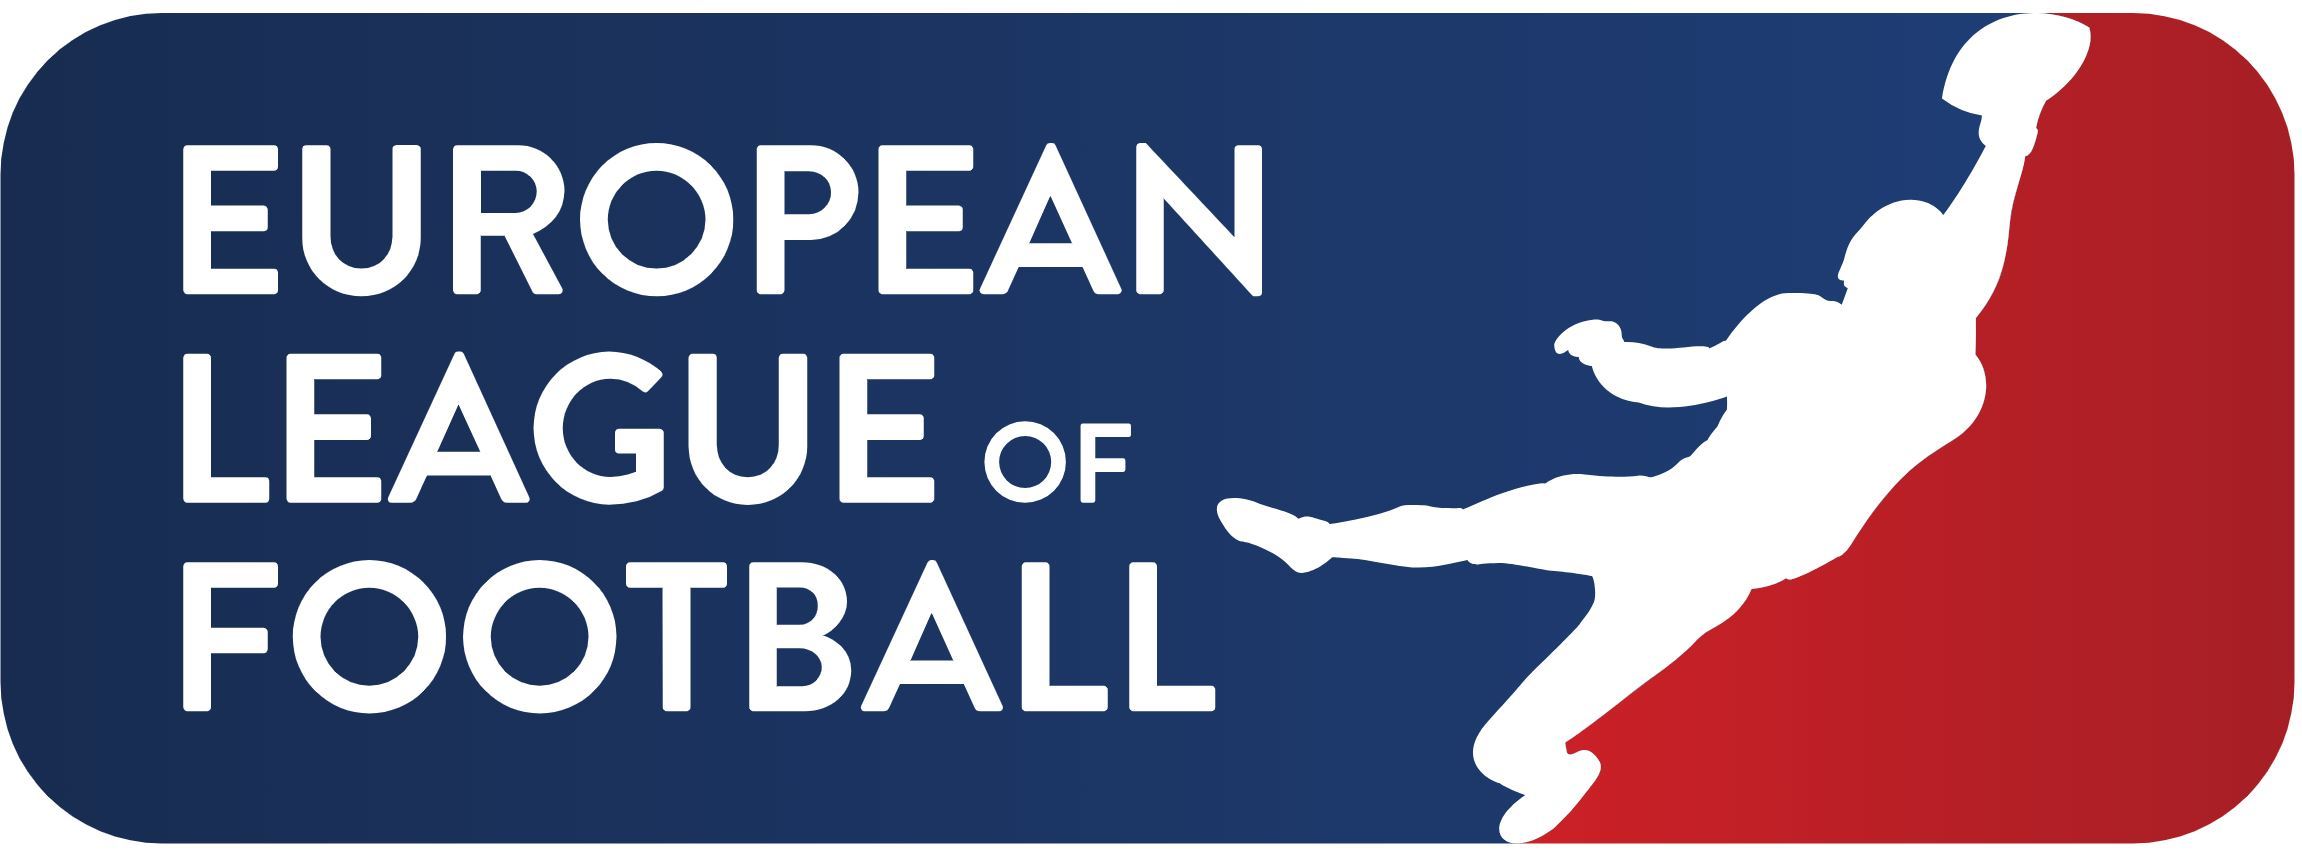 elf european league of football